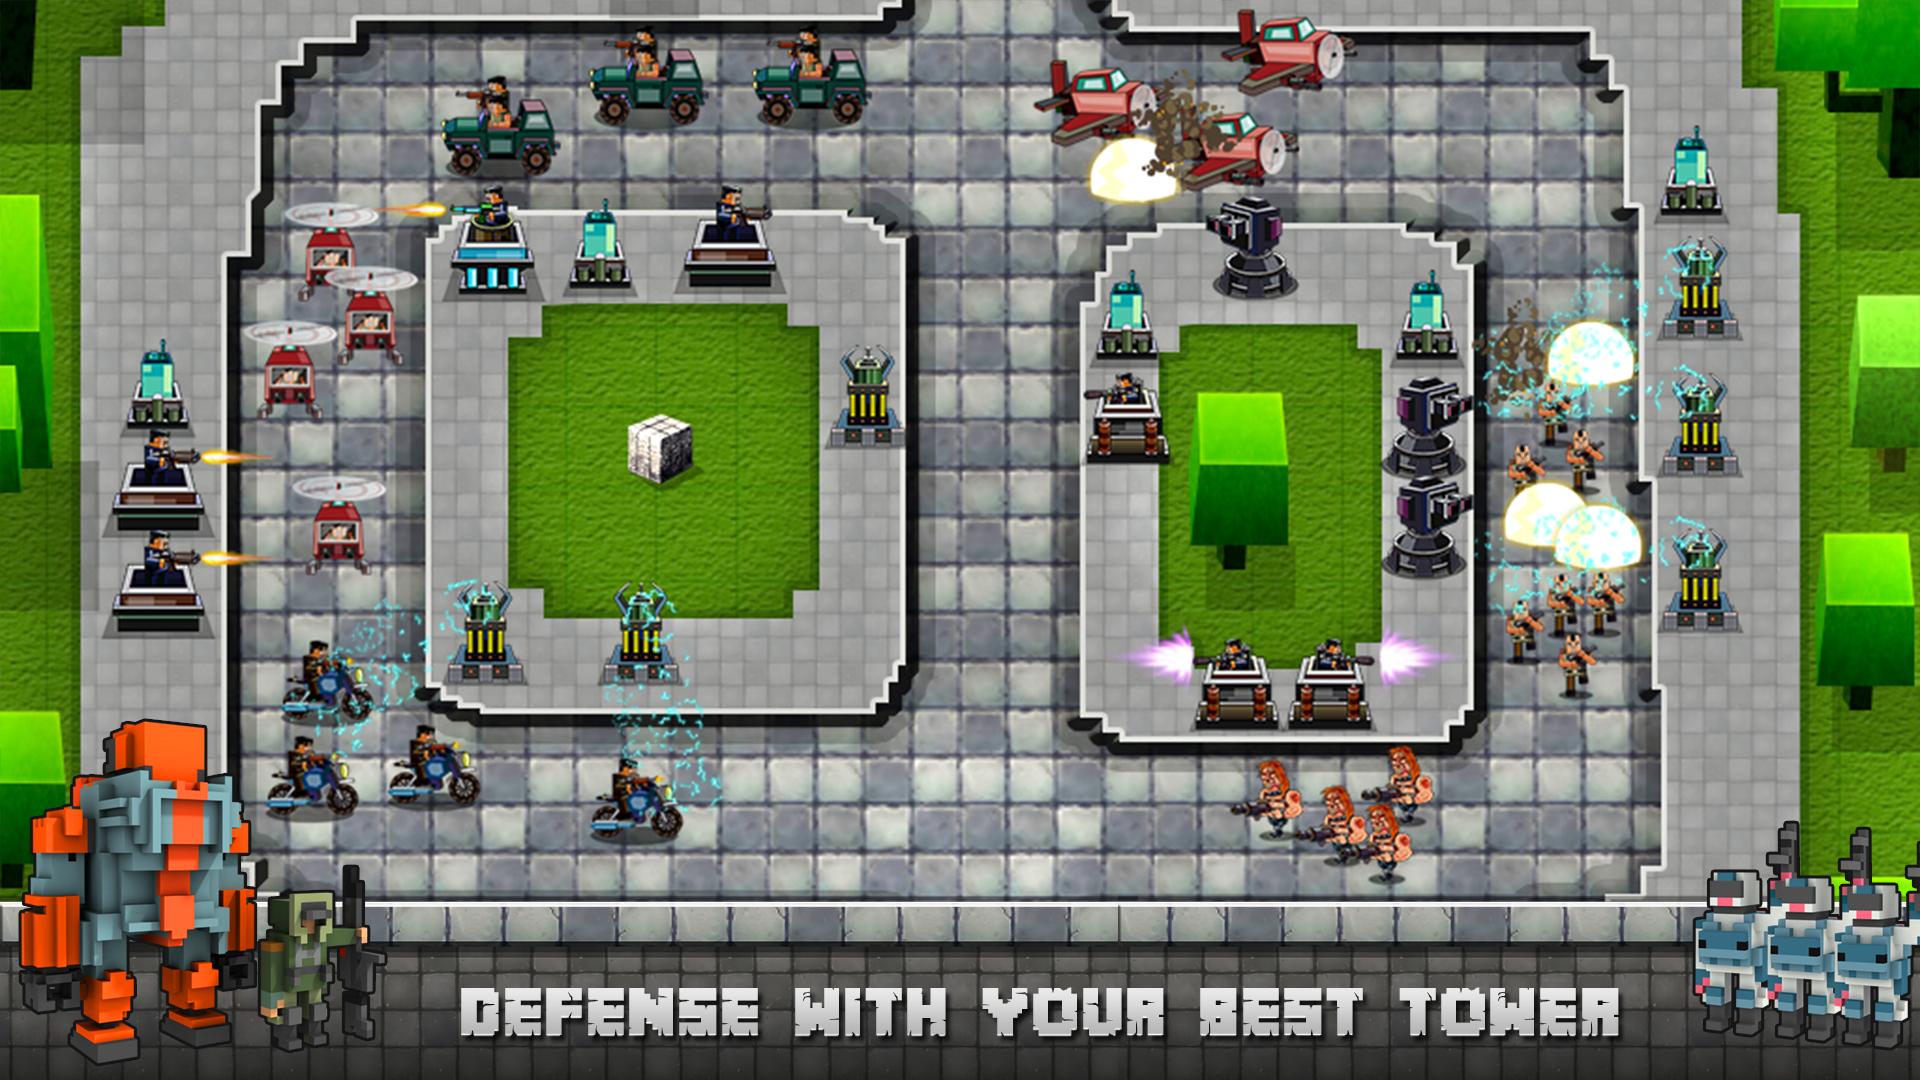 Игры Tower Defense кубики. ТОВЕР дефенс майнкрафт. Защита башни. Tower defense майнкрафт карта